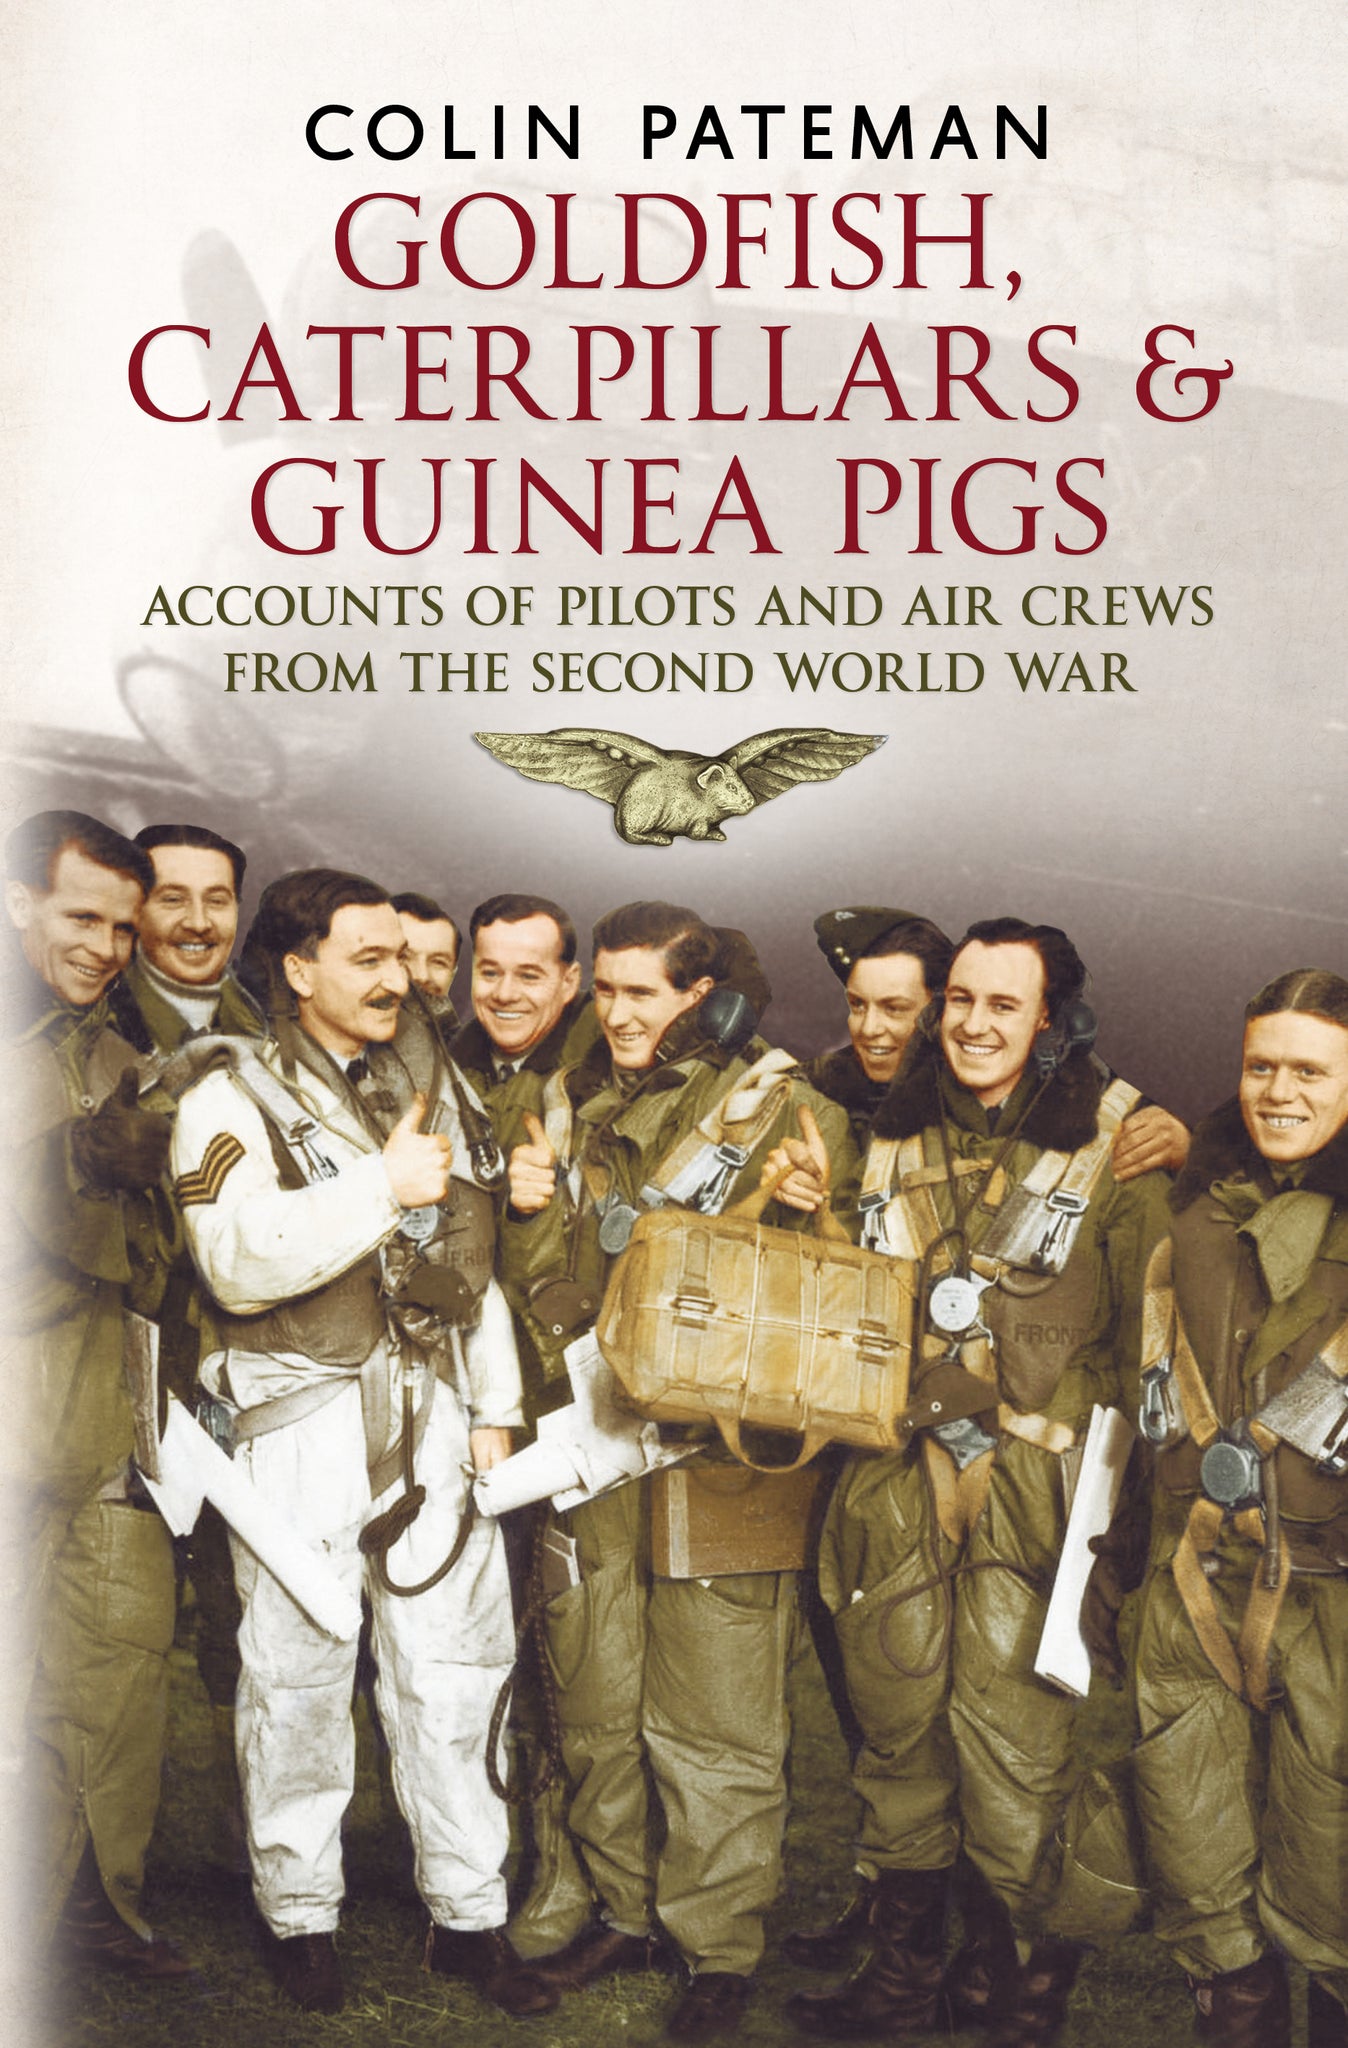 Goldfish Caterpillars & Guinea Pigs: Accounts of Pilots and Air Crews from World War II (hardback edition)